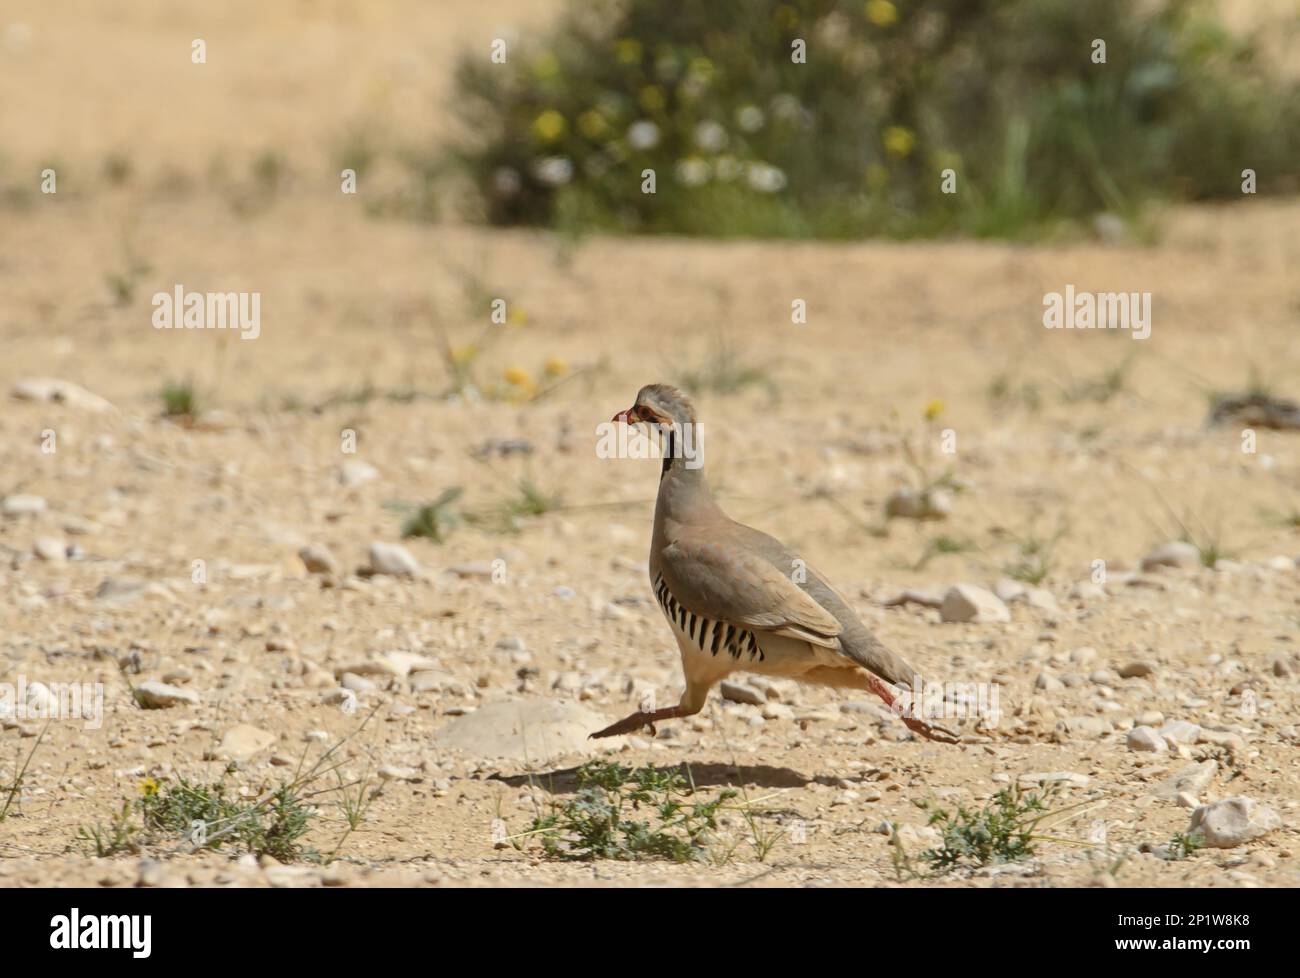 Chukar partridges (Alectoris chukar), Chicken Birds, Animals, Birds, Chukar Partridge adult, running in desert, Nizzana, Israel Stock Photo